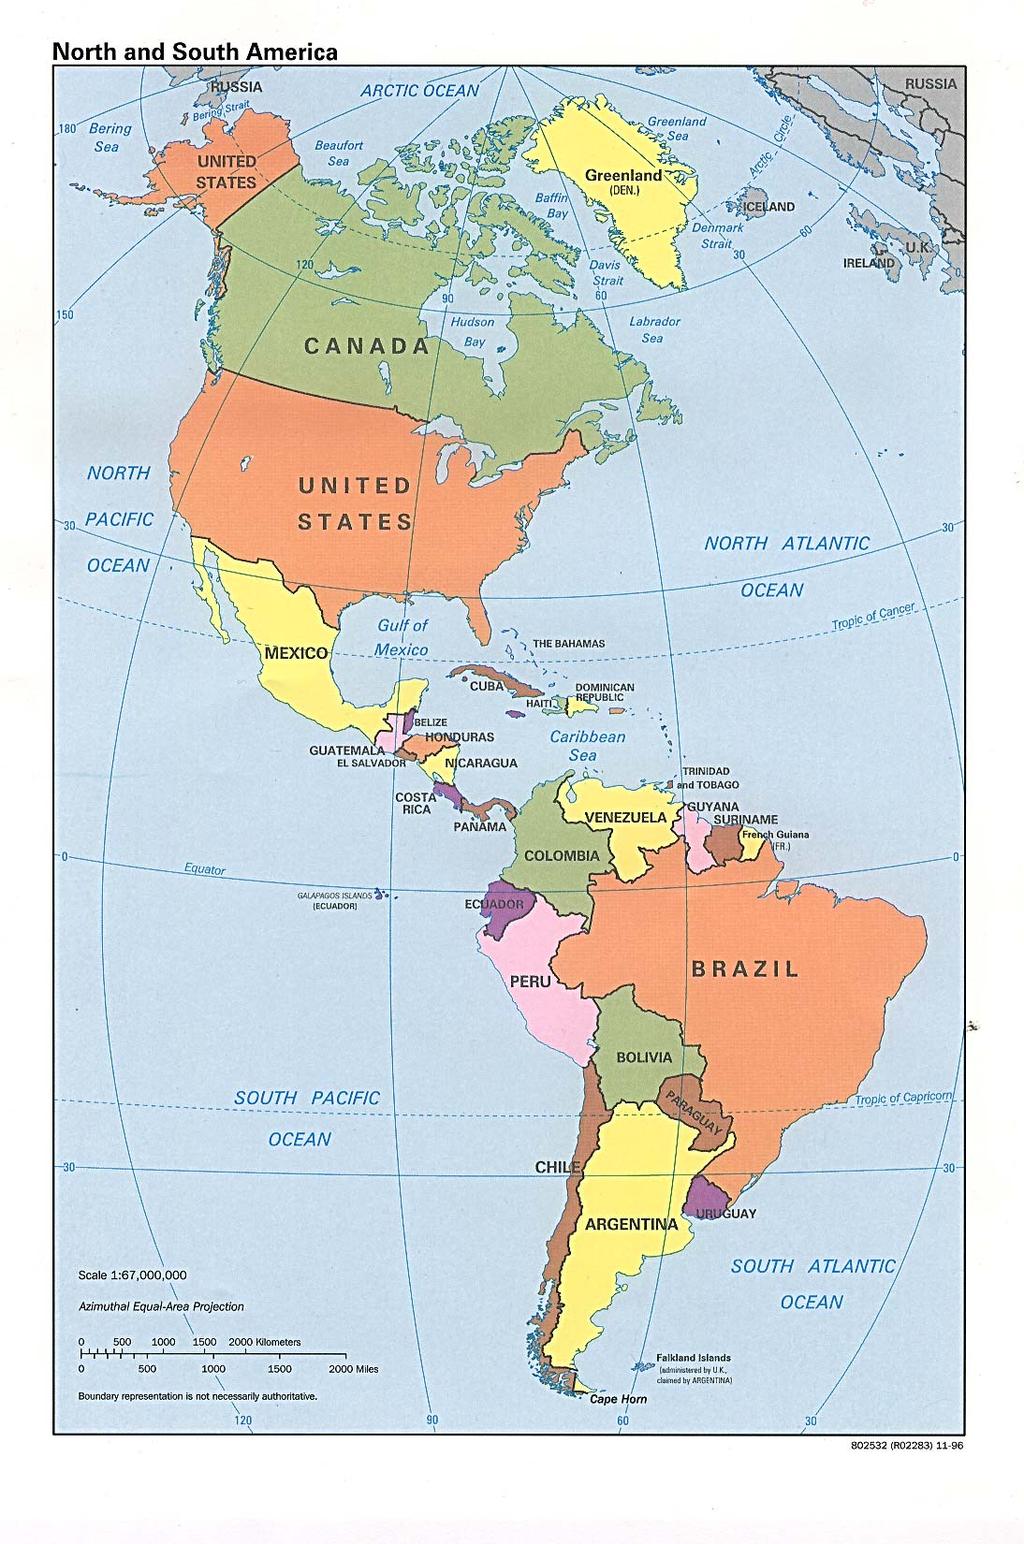 Where is Panama? The U.S.